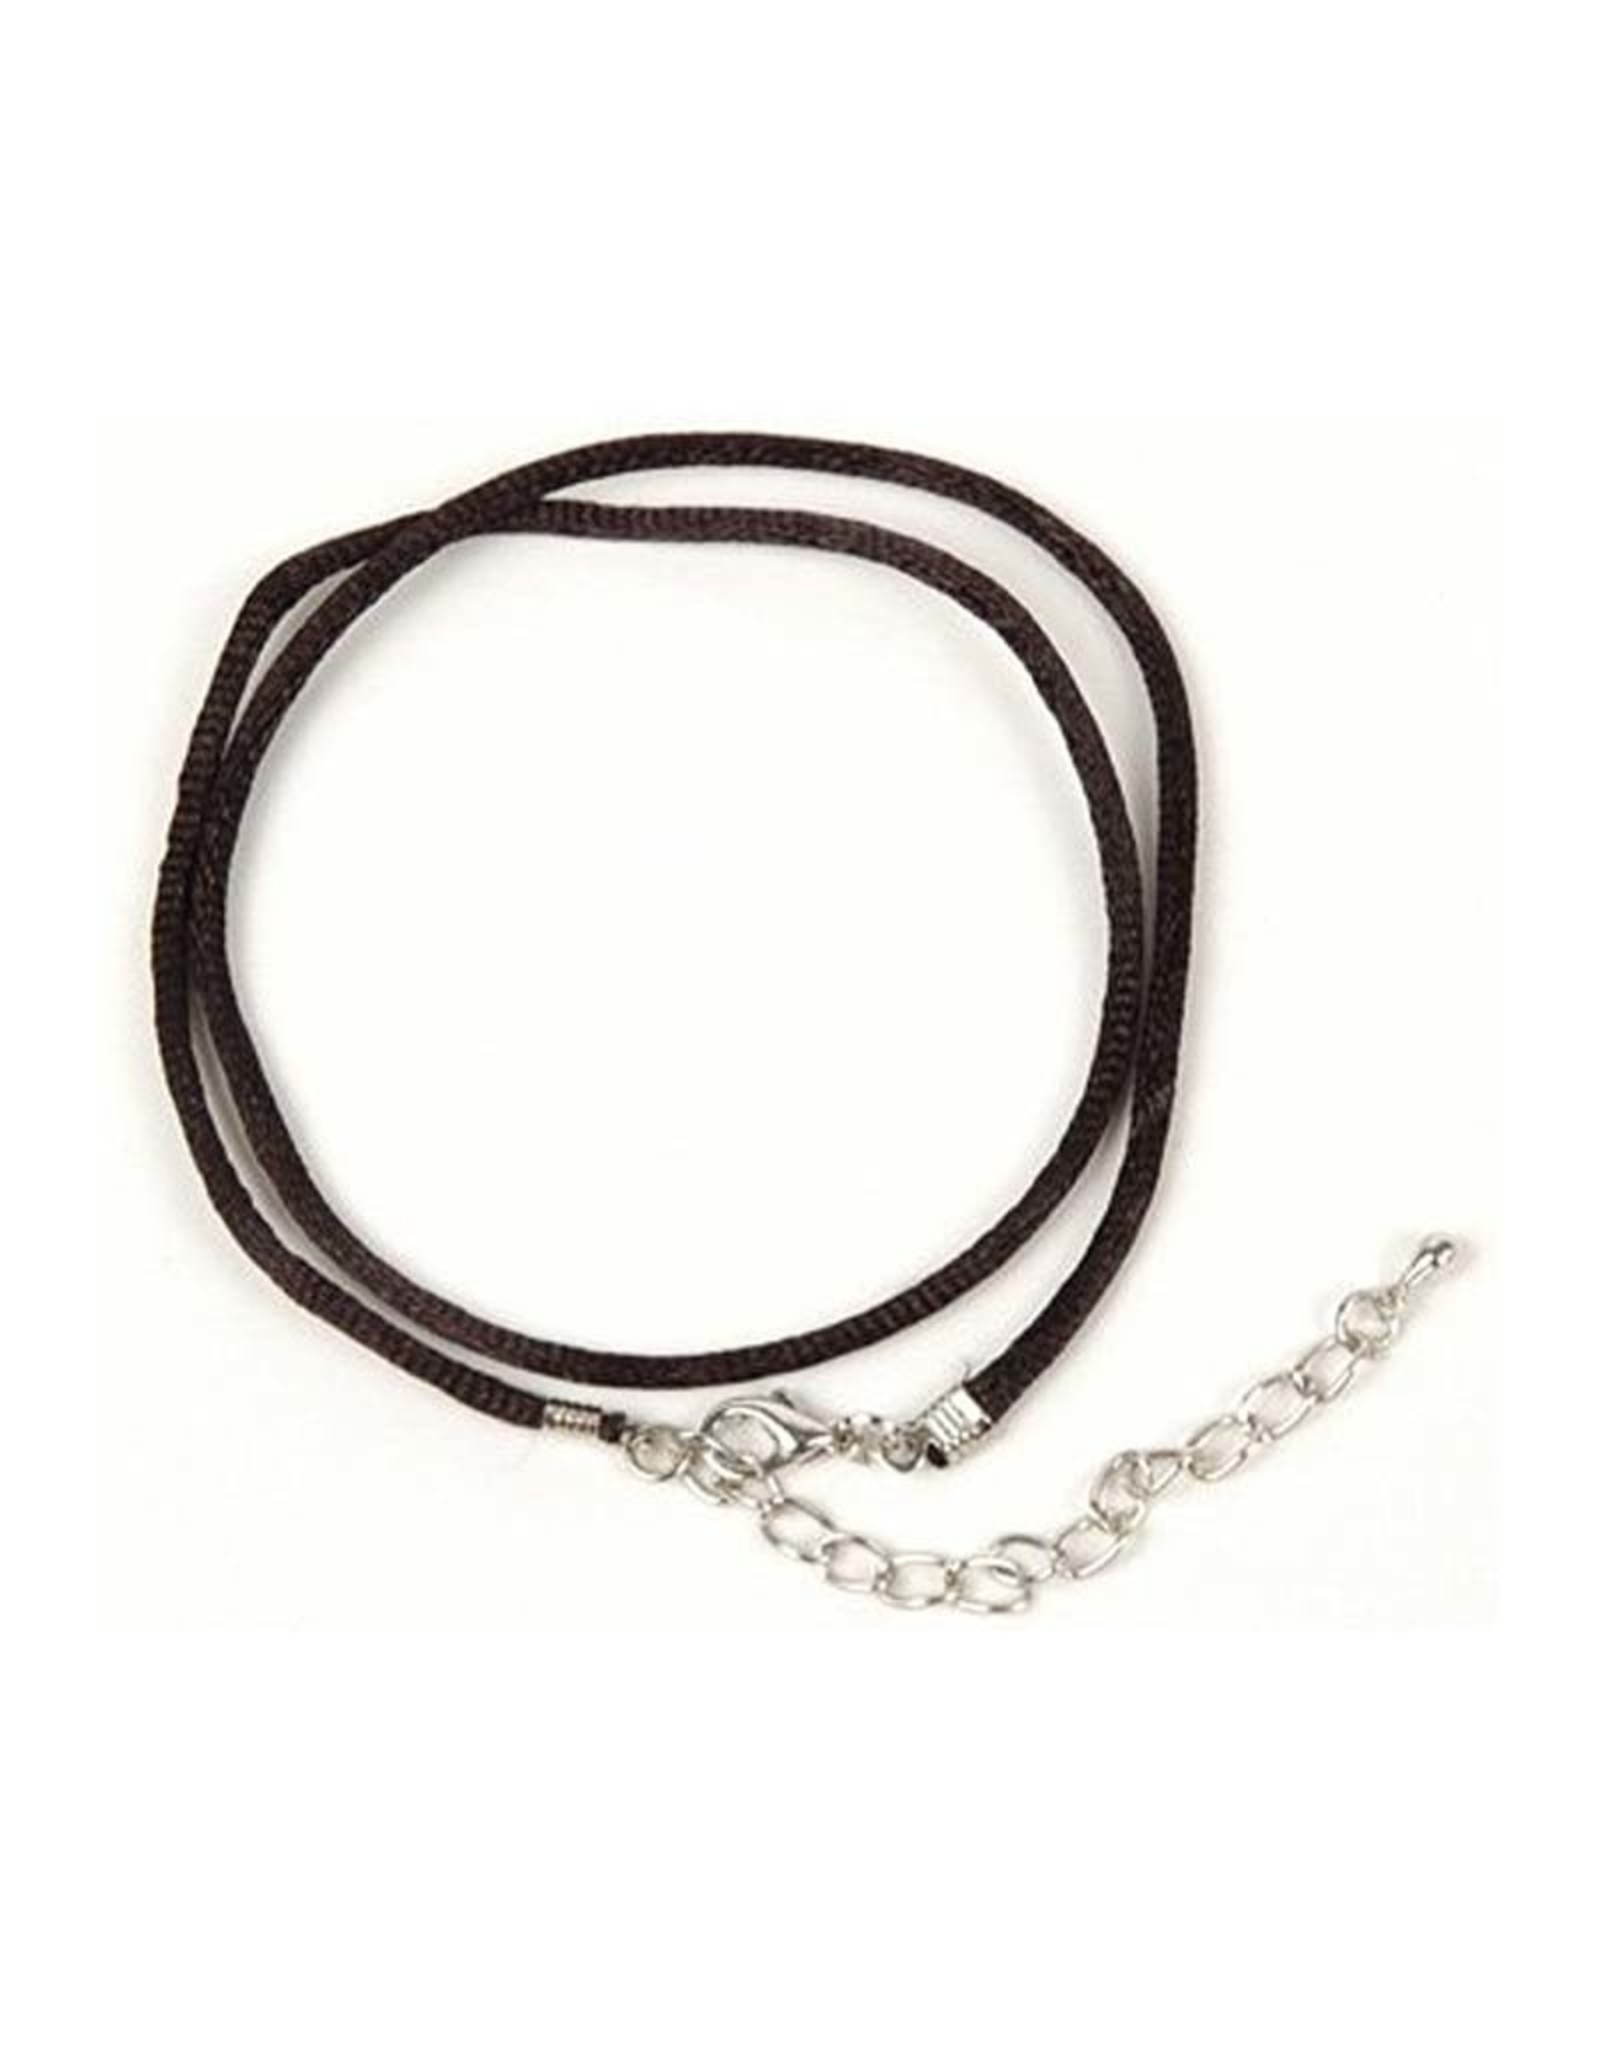 Black Silk Cord Necklace - 19"